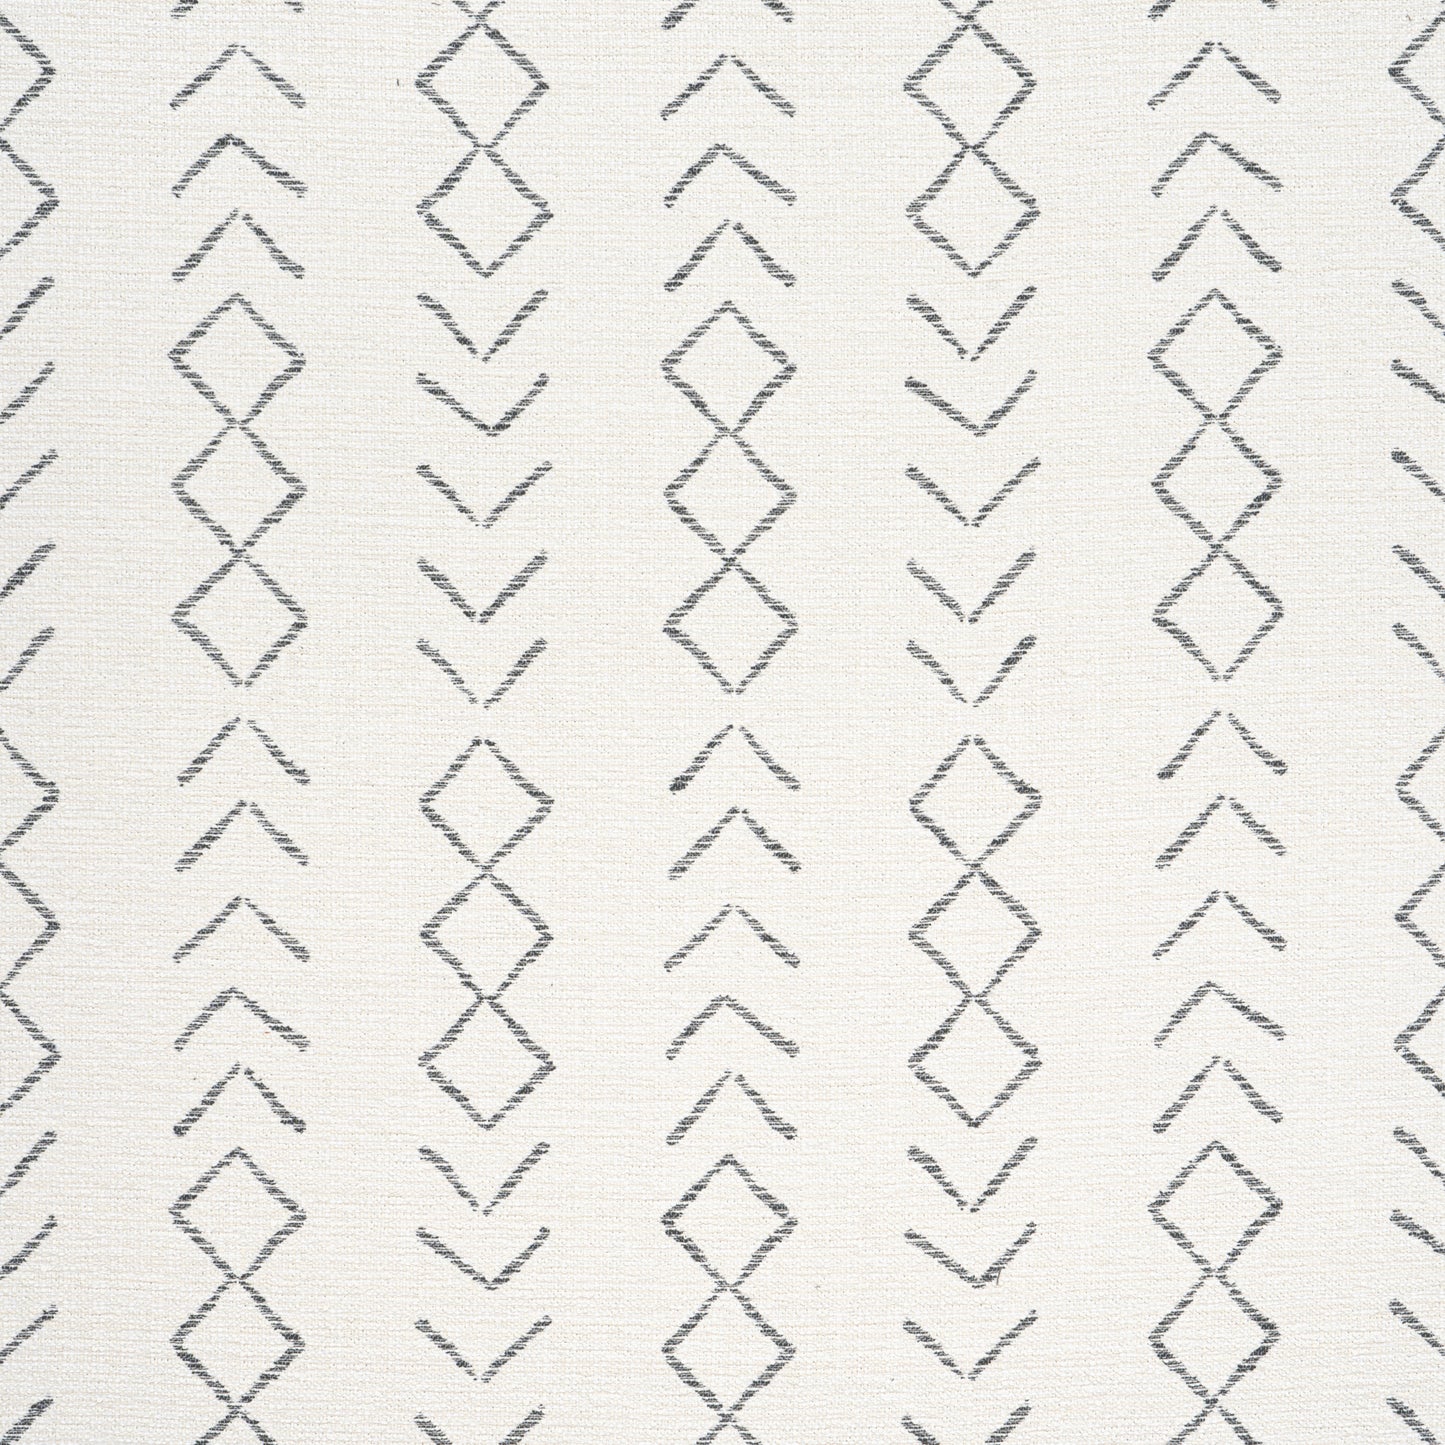 Purchase Thibaut Fabric Product W78363 pattern name Anasazi color Black